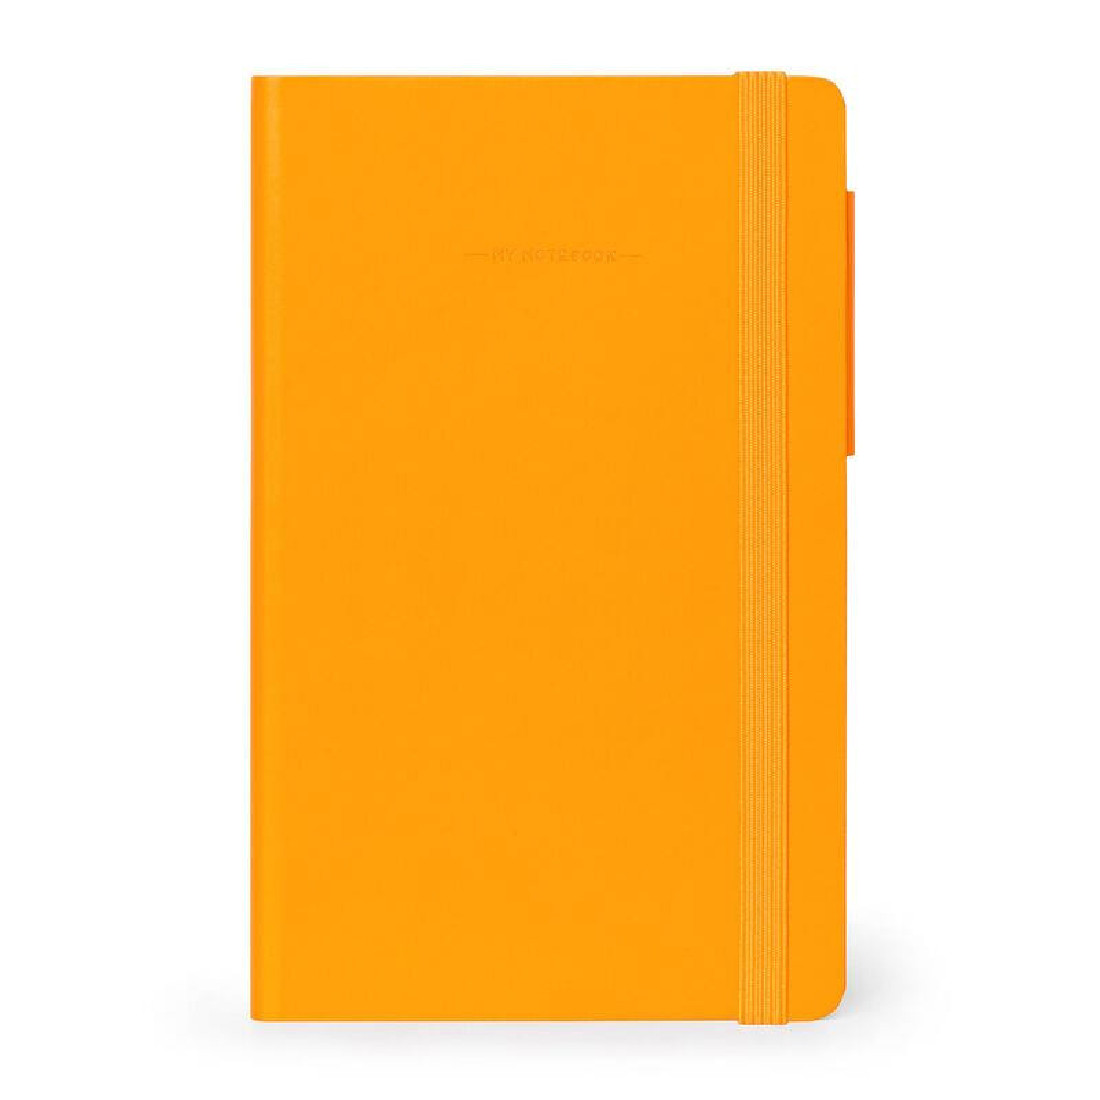 My Notebook - Lined - Medium - Mango Cover LEGAMI